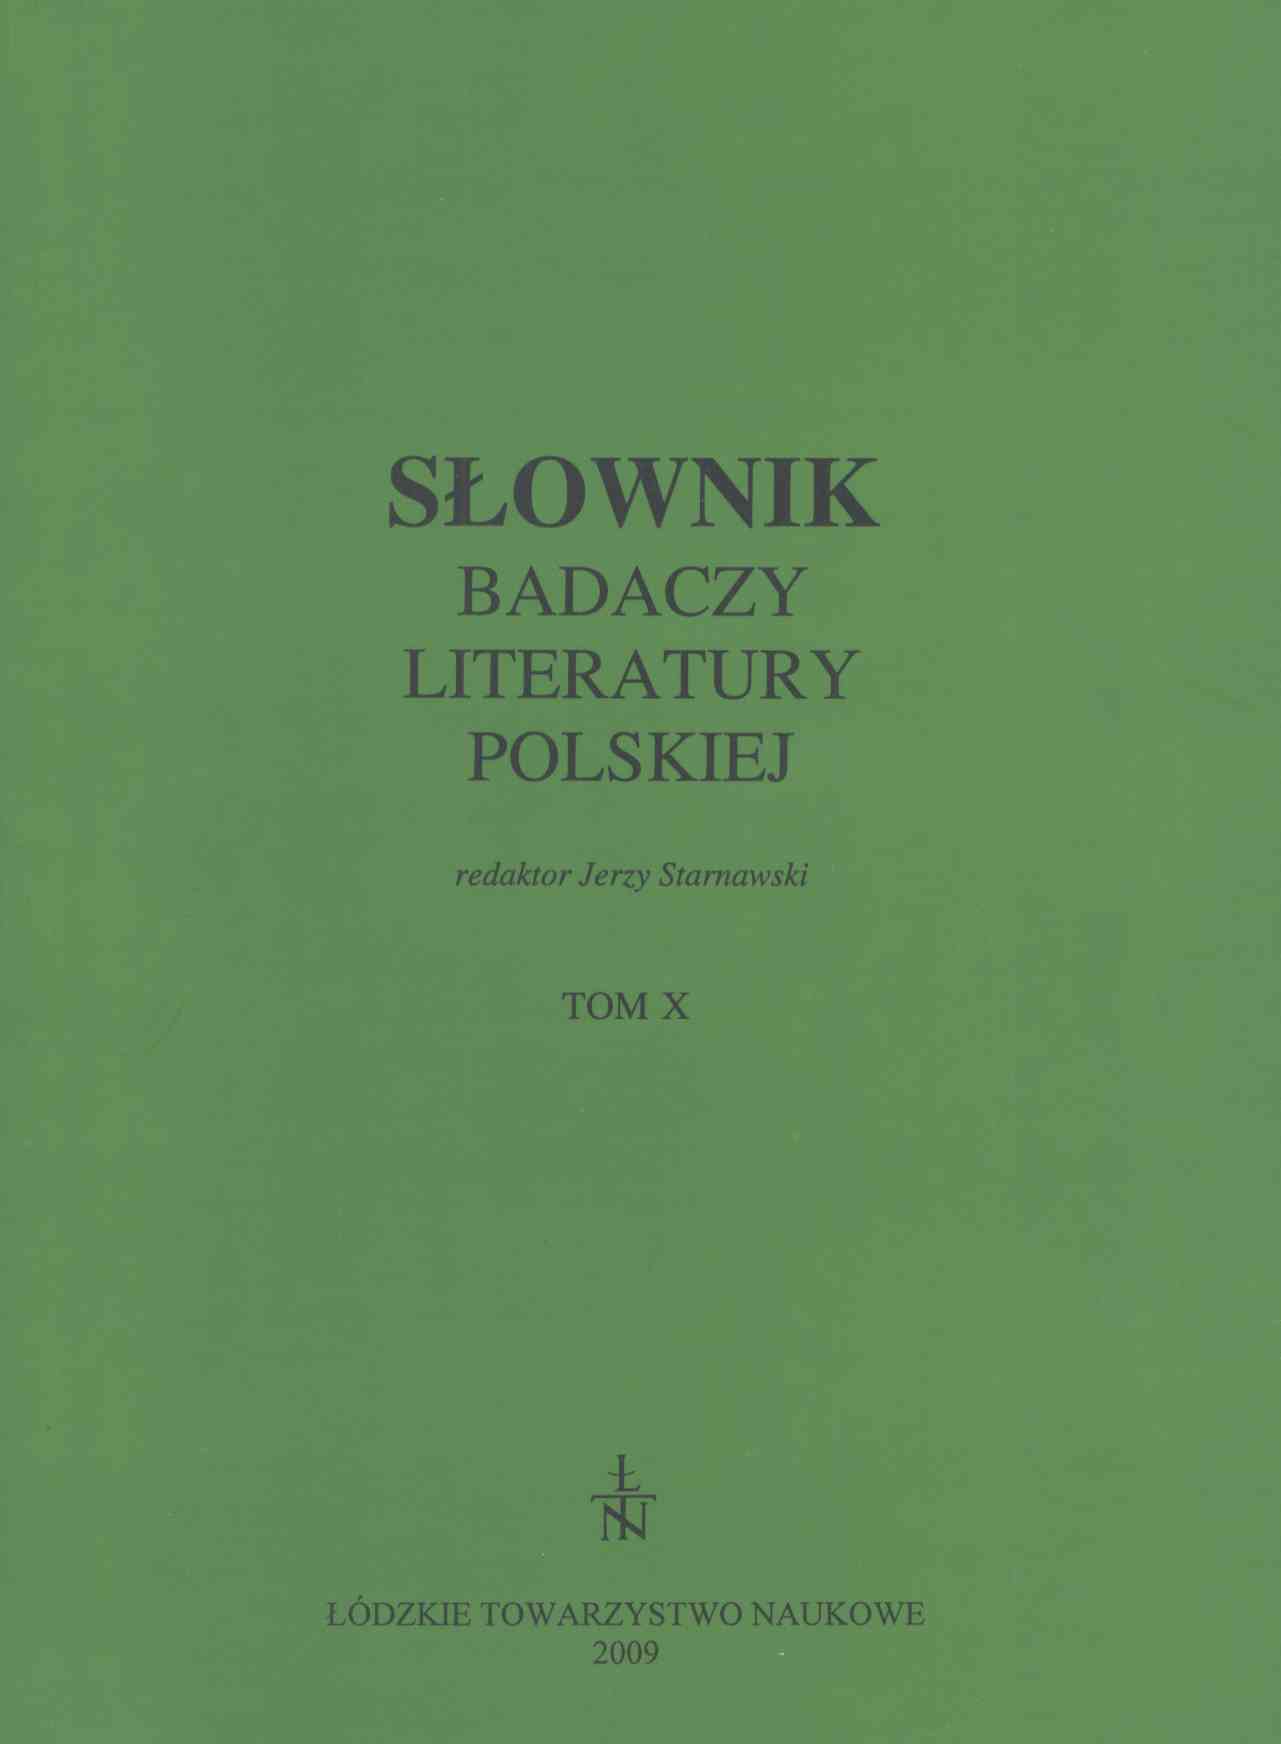 Dictionary of Polish literature scholars. Volume 10